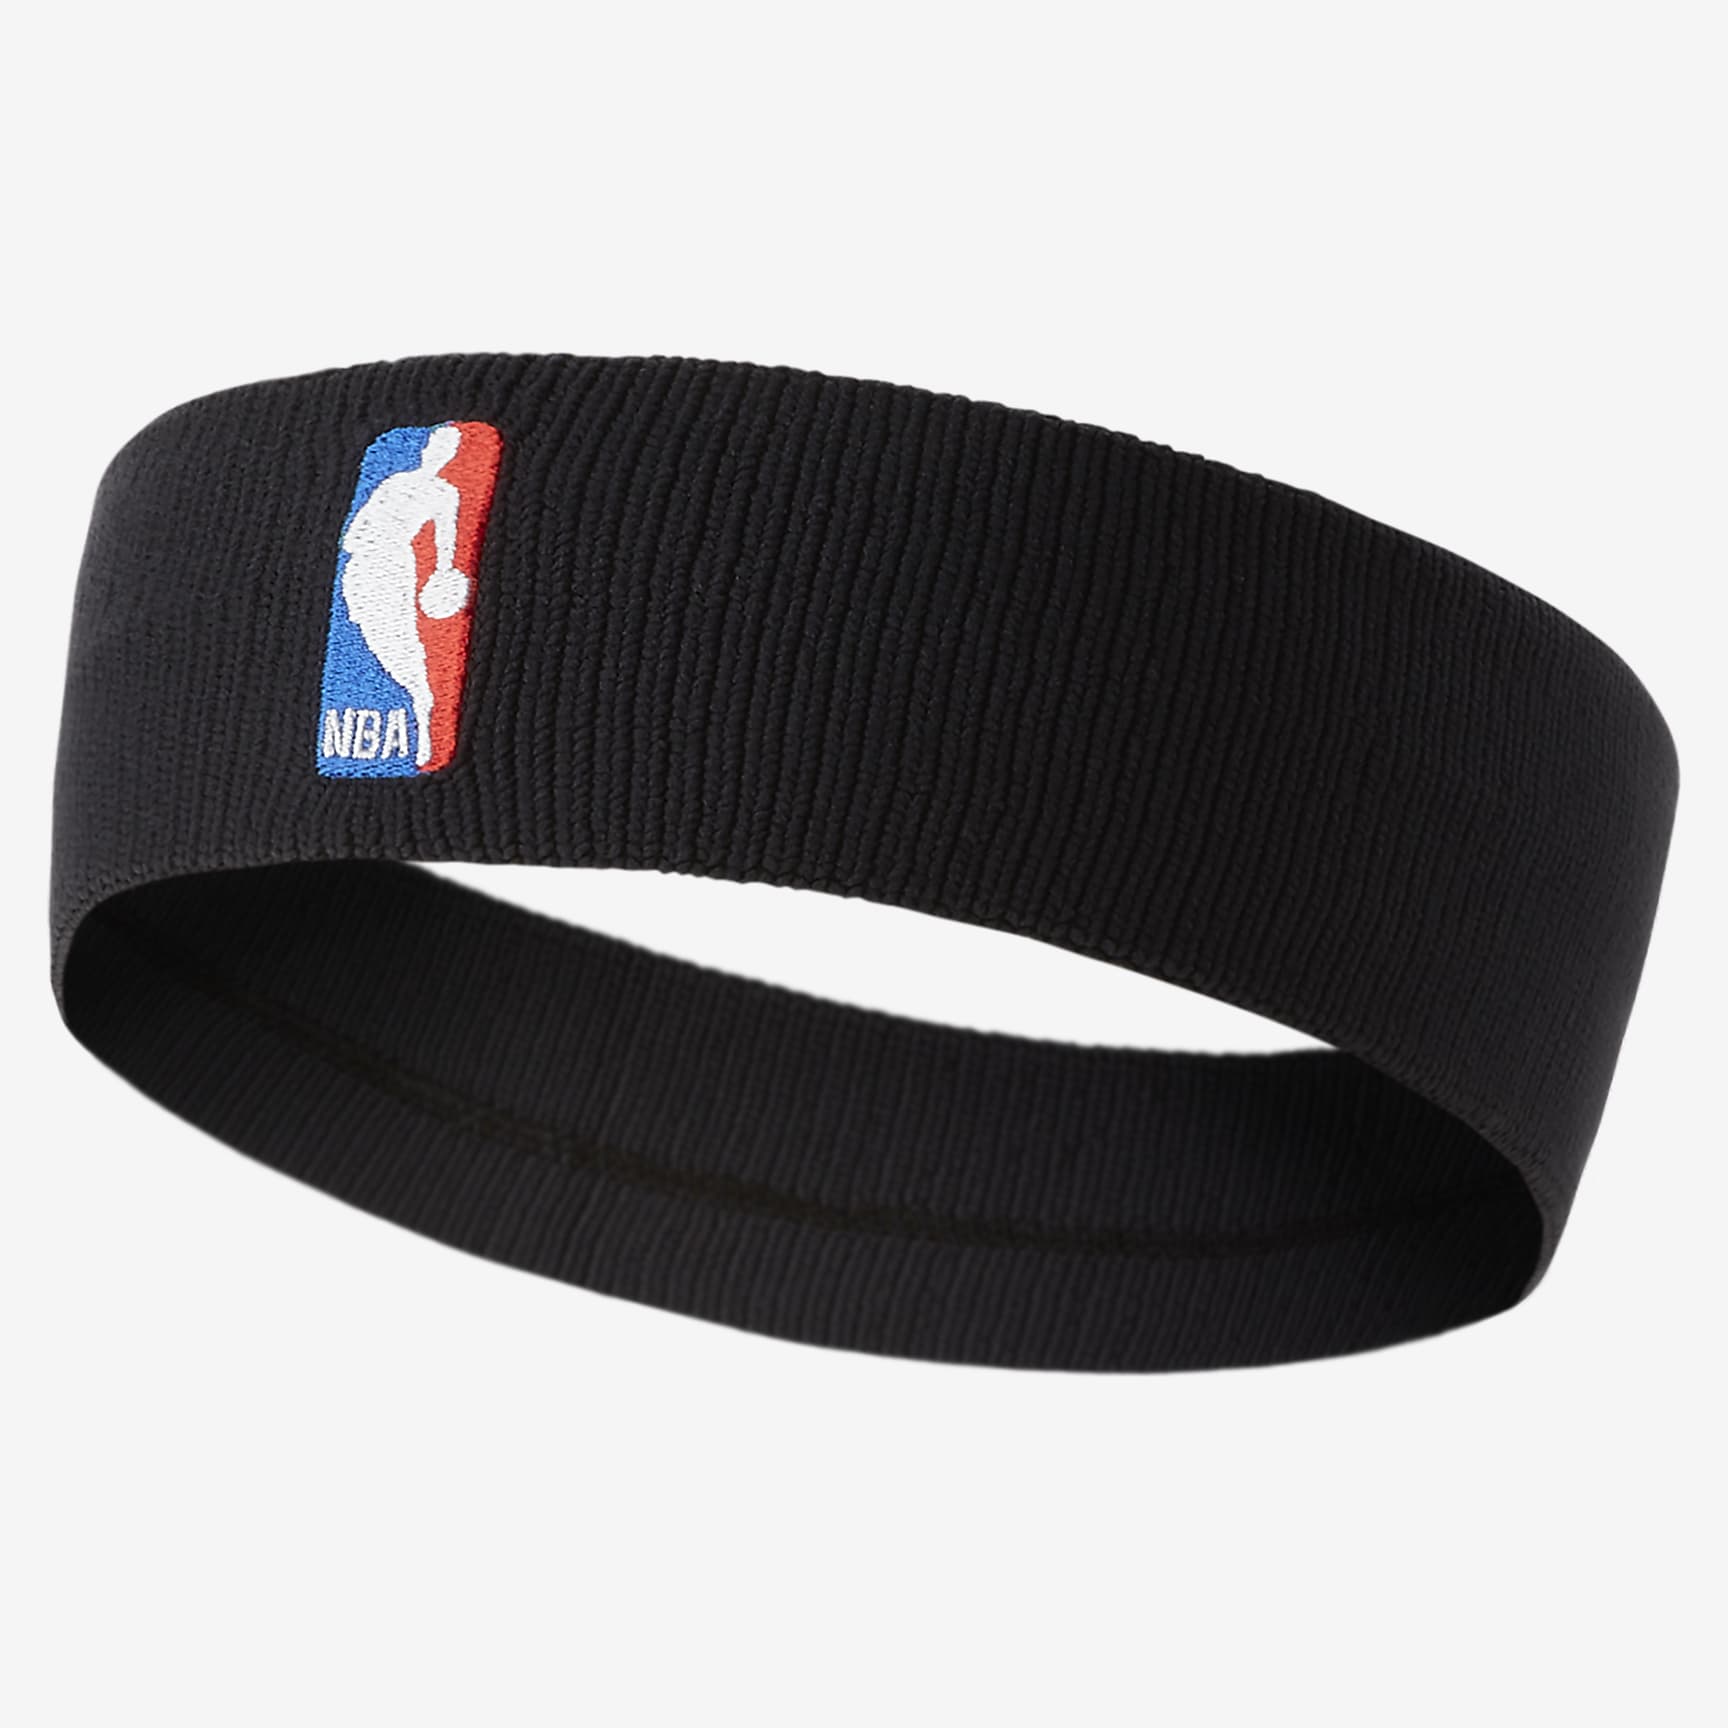 Nike NBA Headband - Black/Black